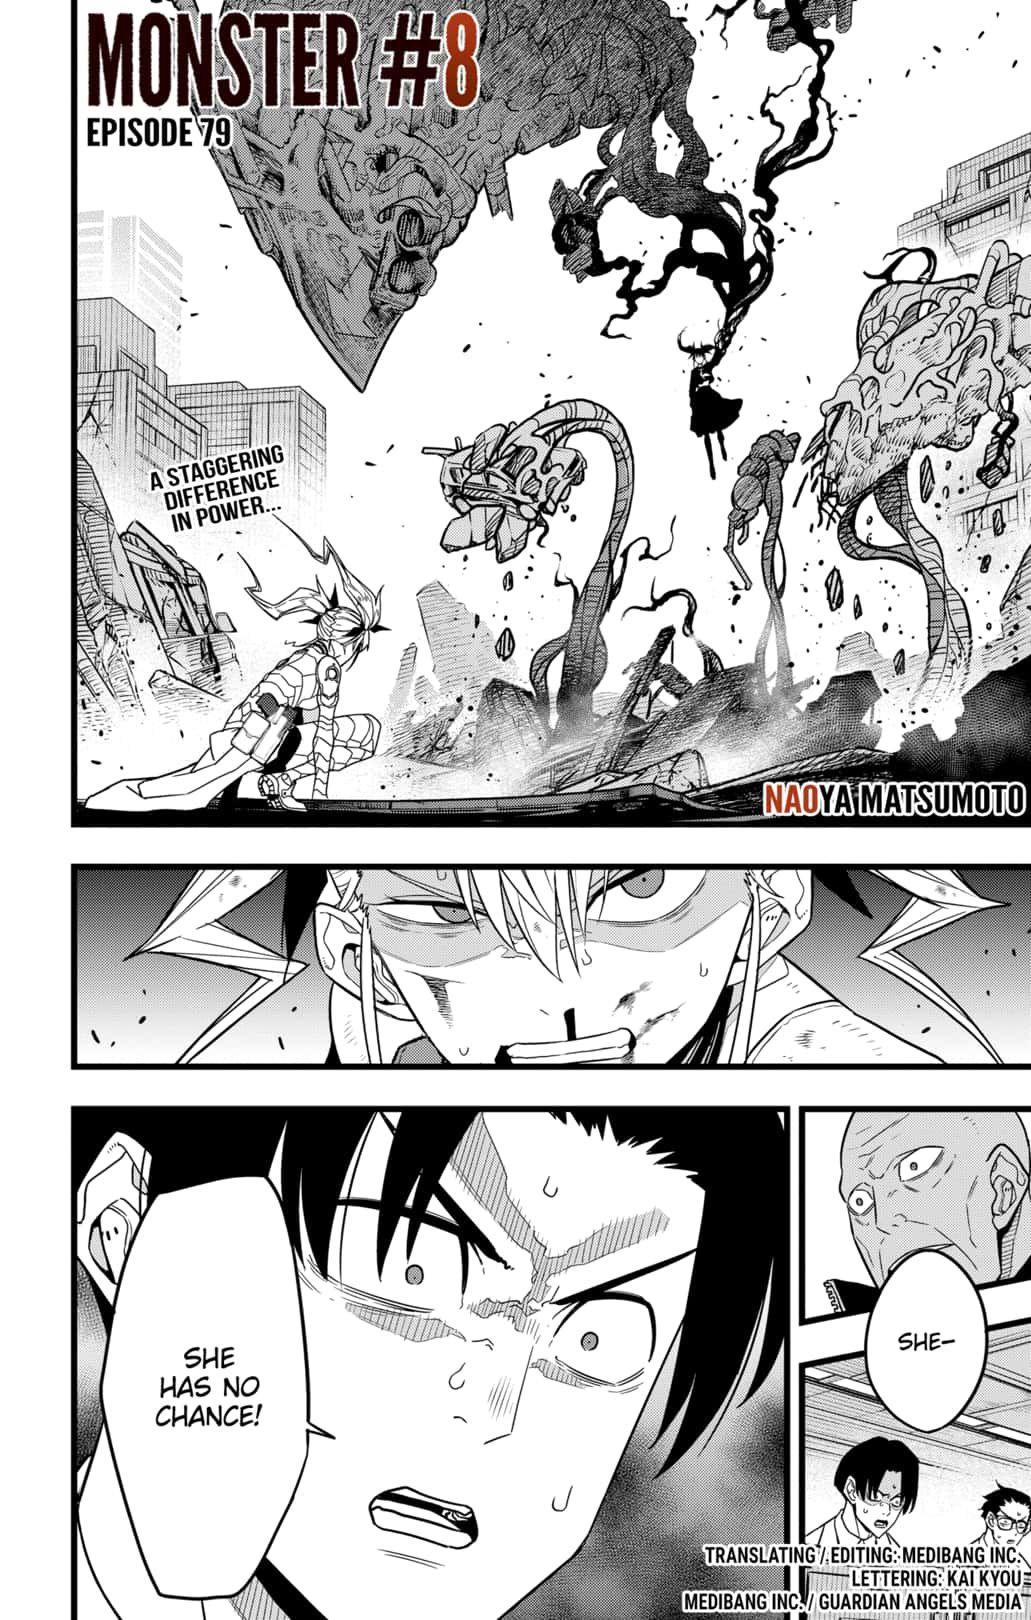 Kaiju No. 8 Chapter 79 page 1 - Mangakakalot